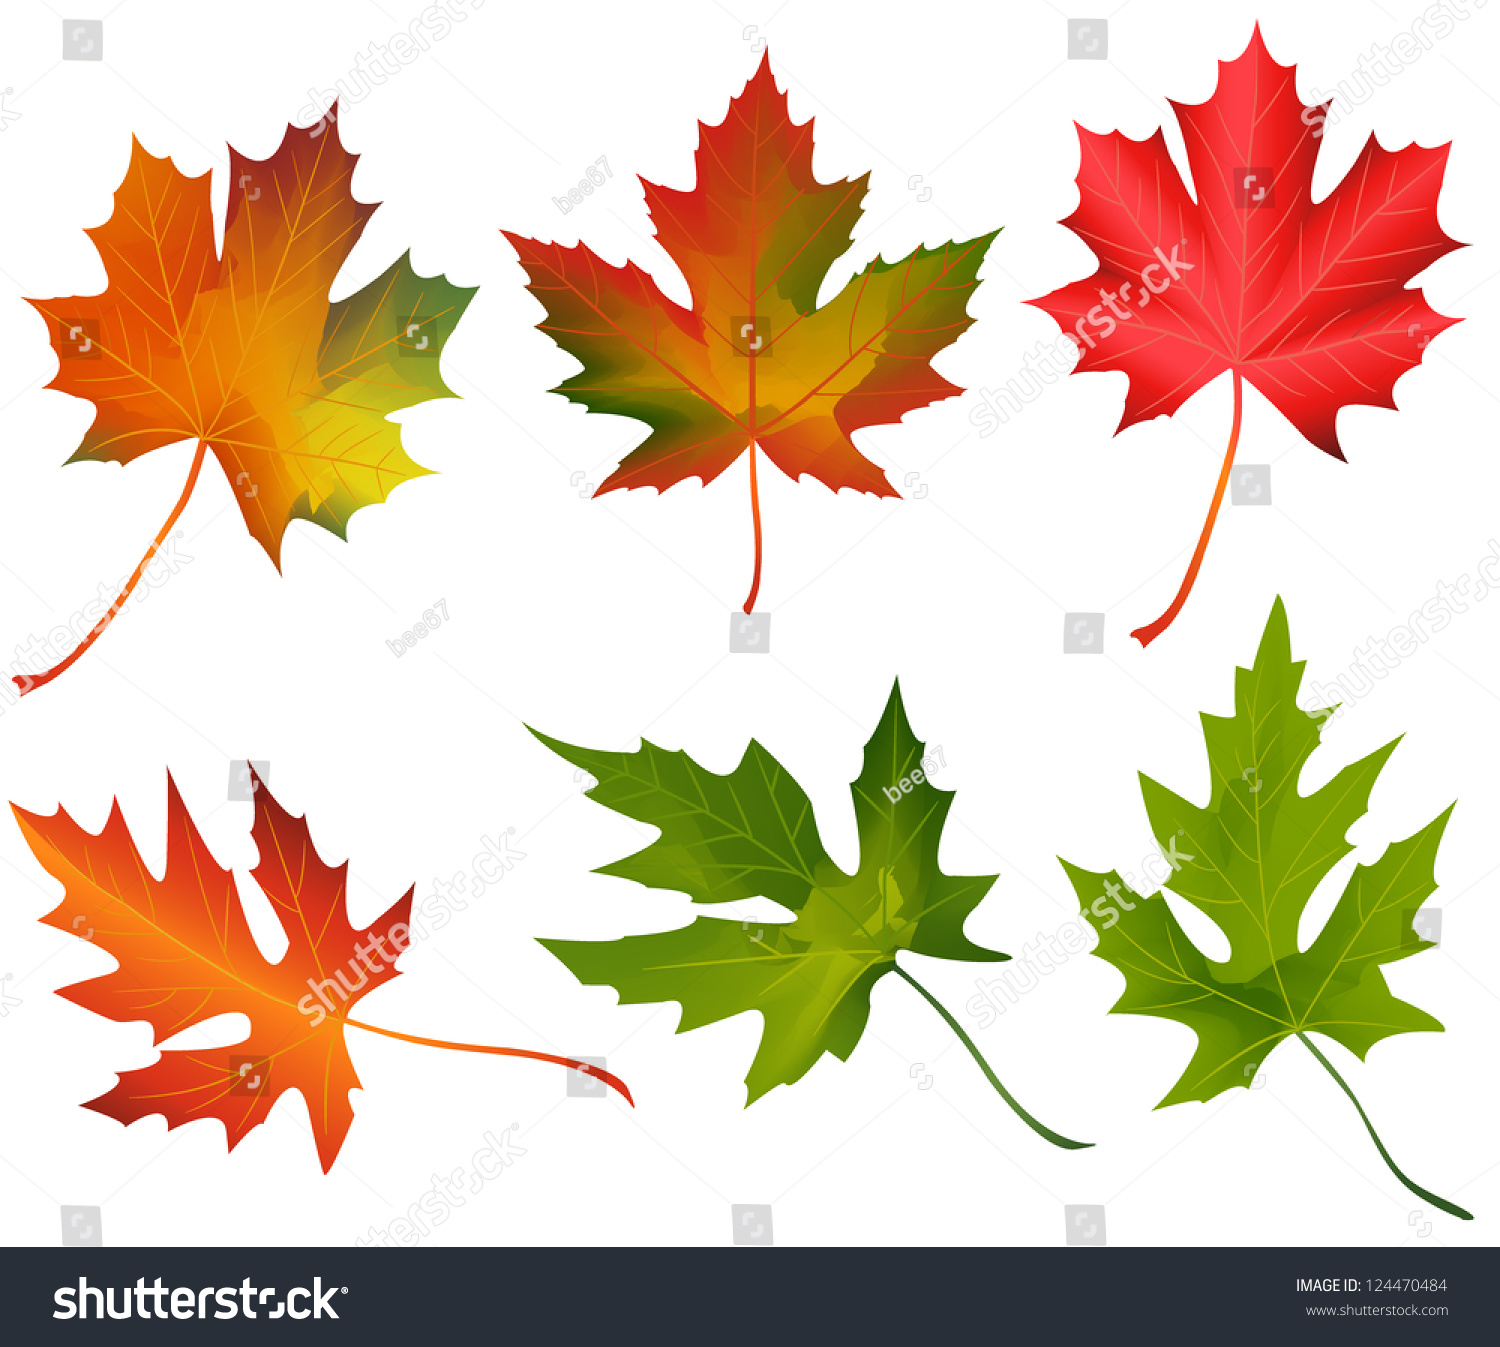 Autumn Leaves Stock Vector Illustration 124470484 : Shutterstock